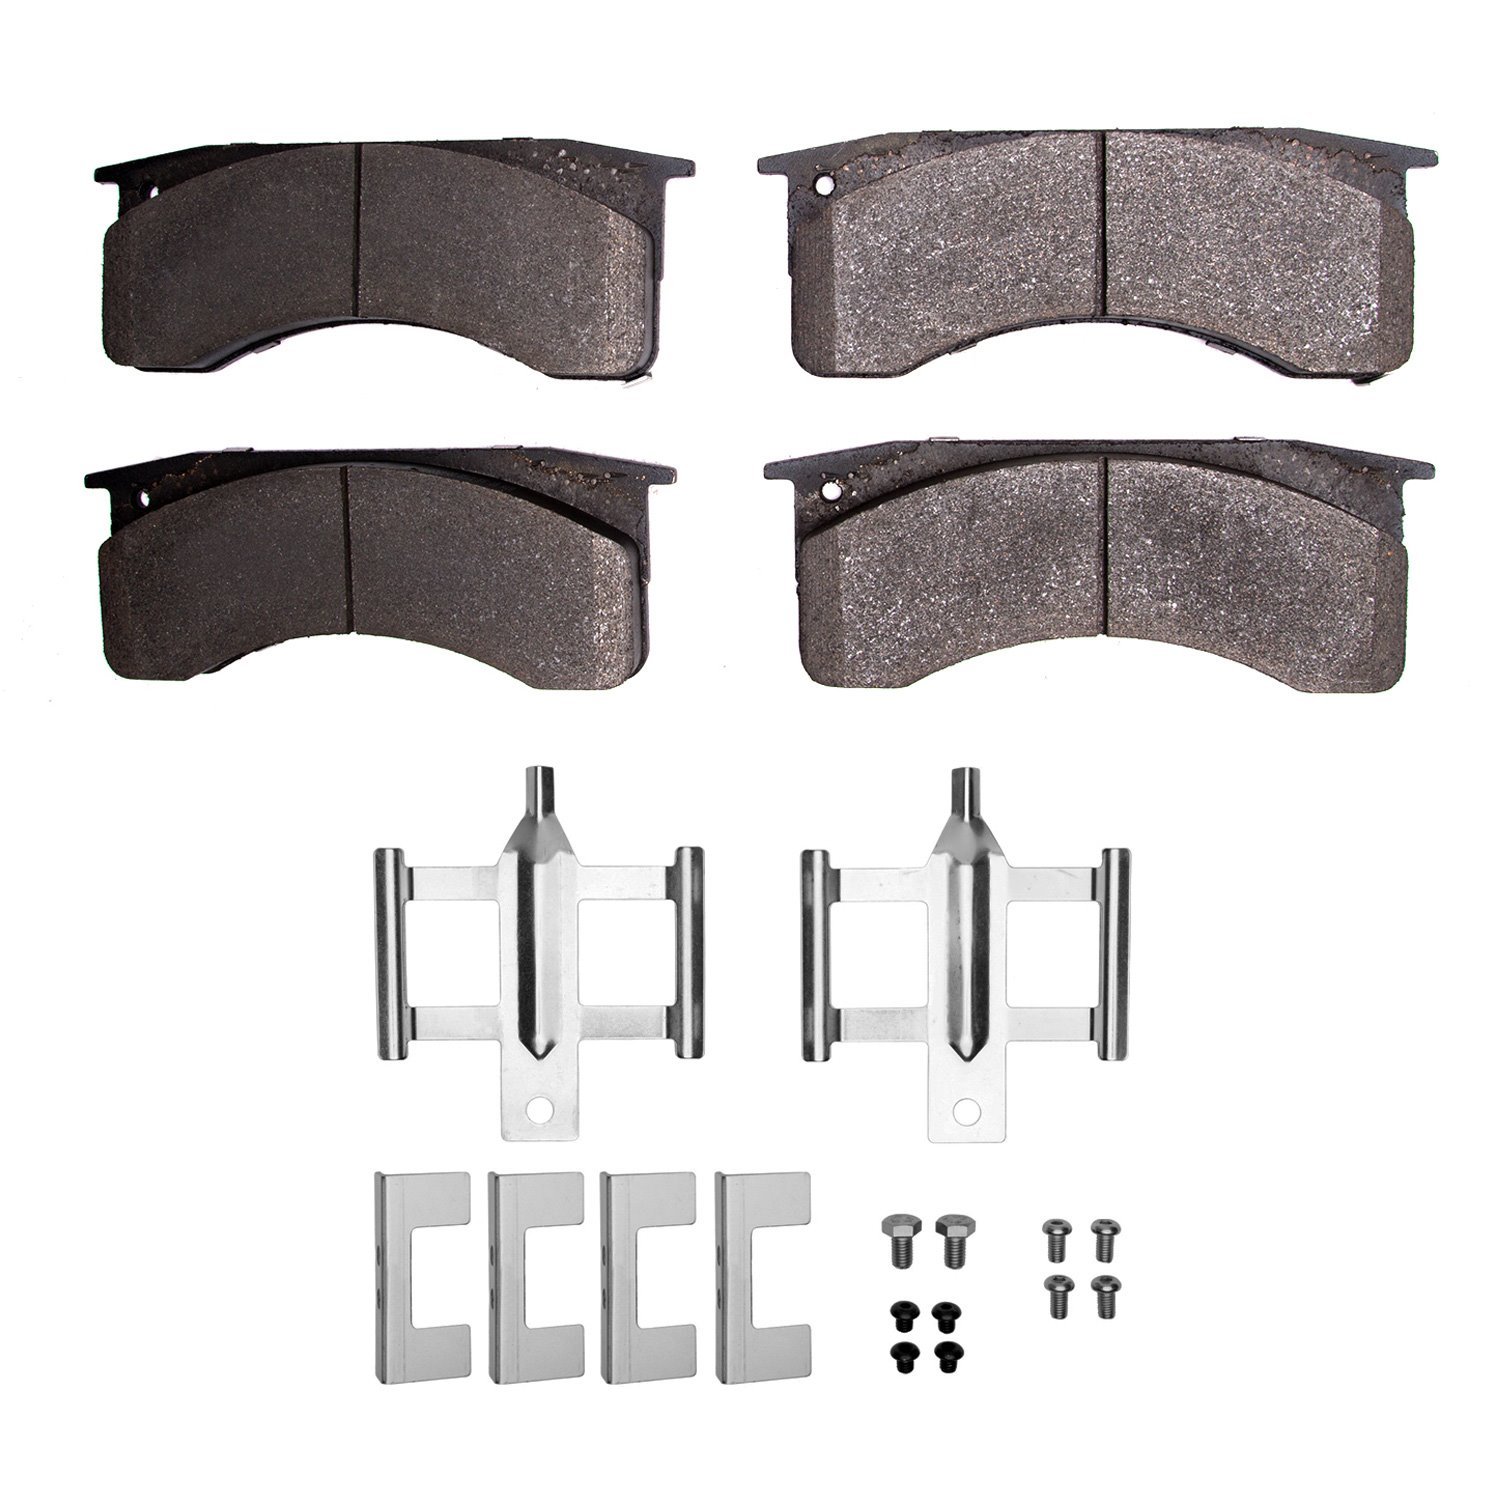 Semi-Metallic Brake Pads & Hardware Kit, Fits Select Fits Multiple Makes/Models, Position: Front & Rear